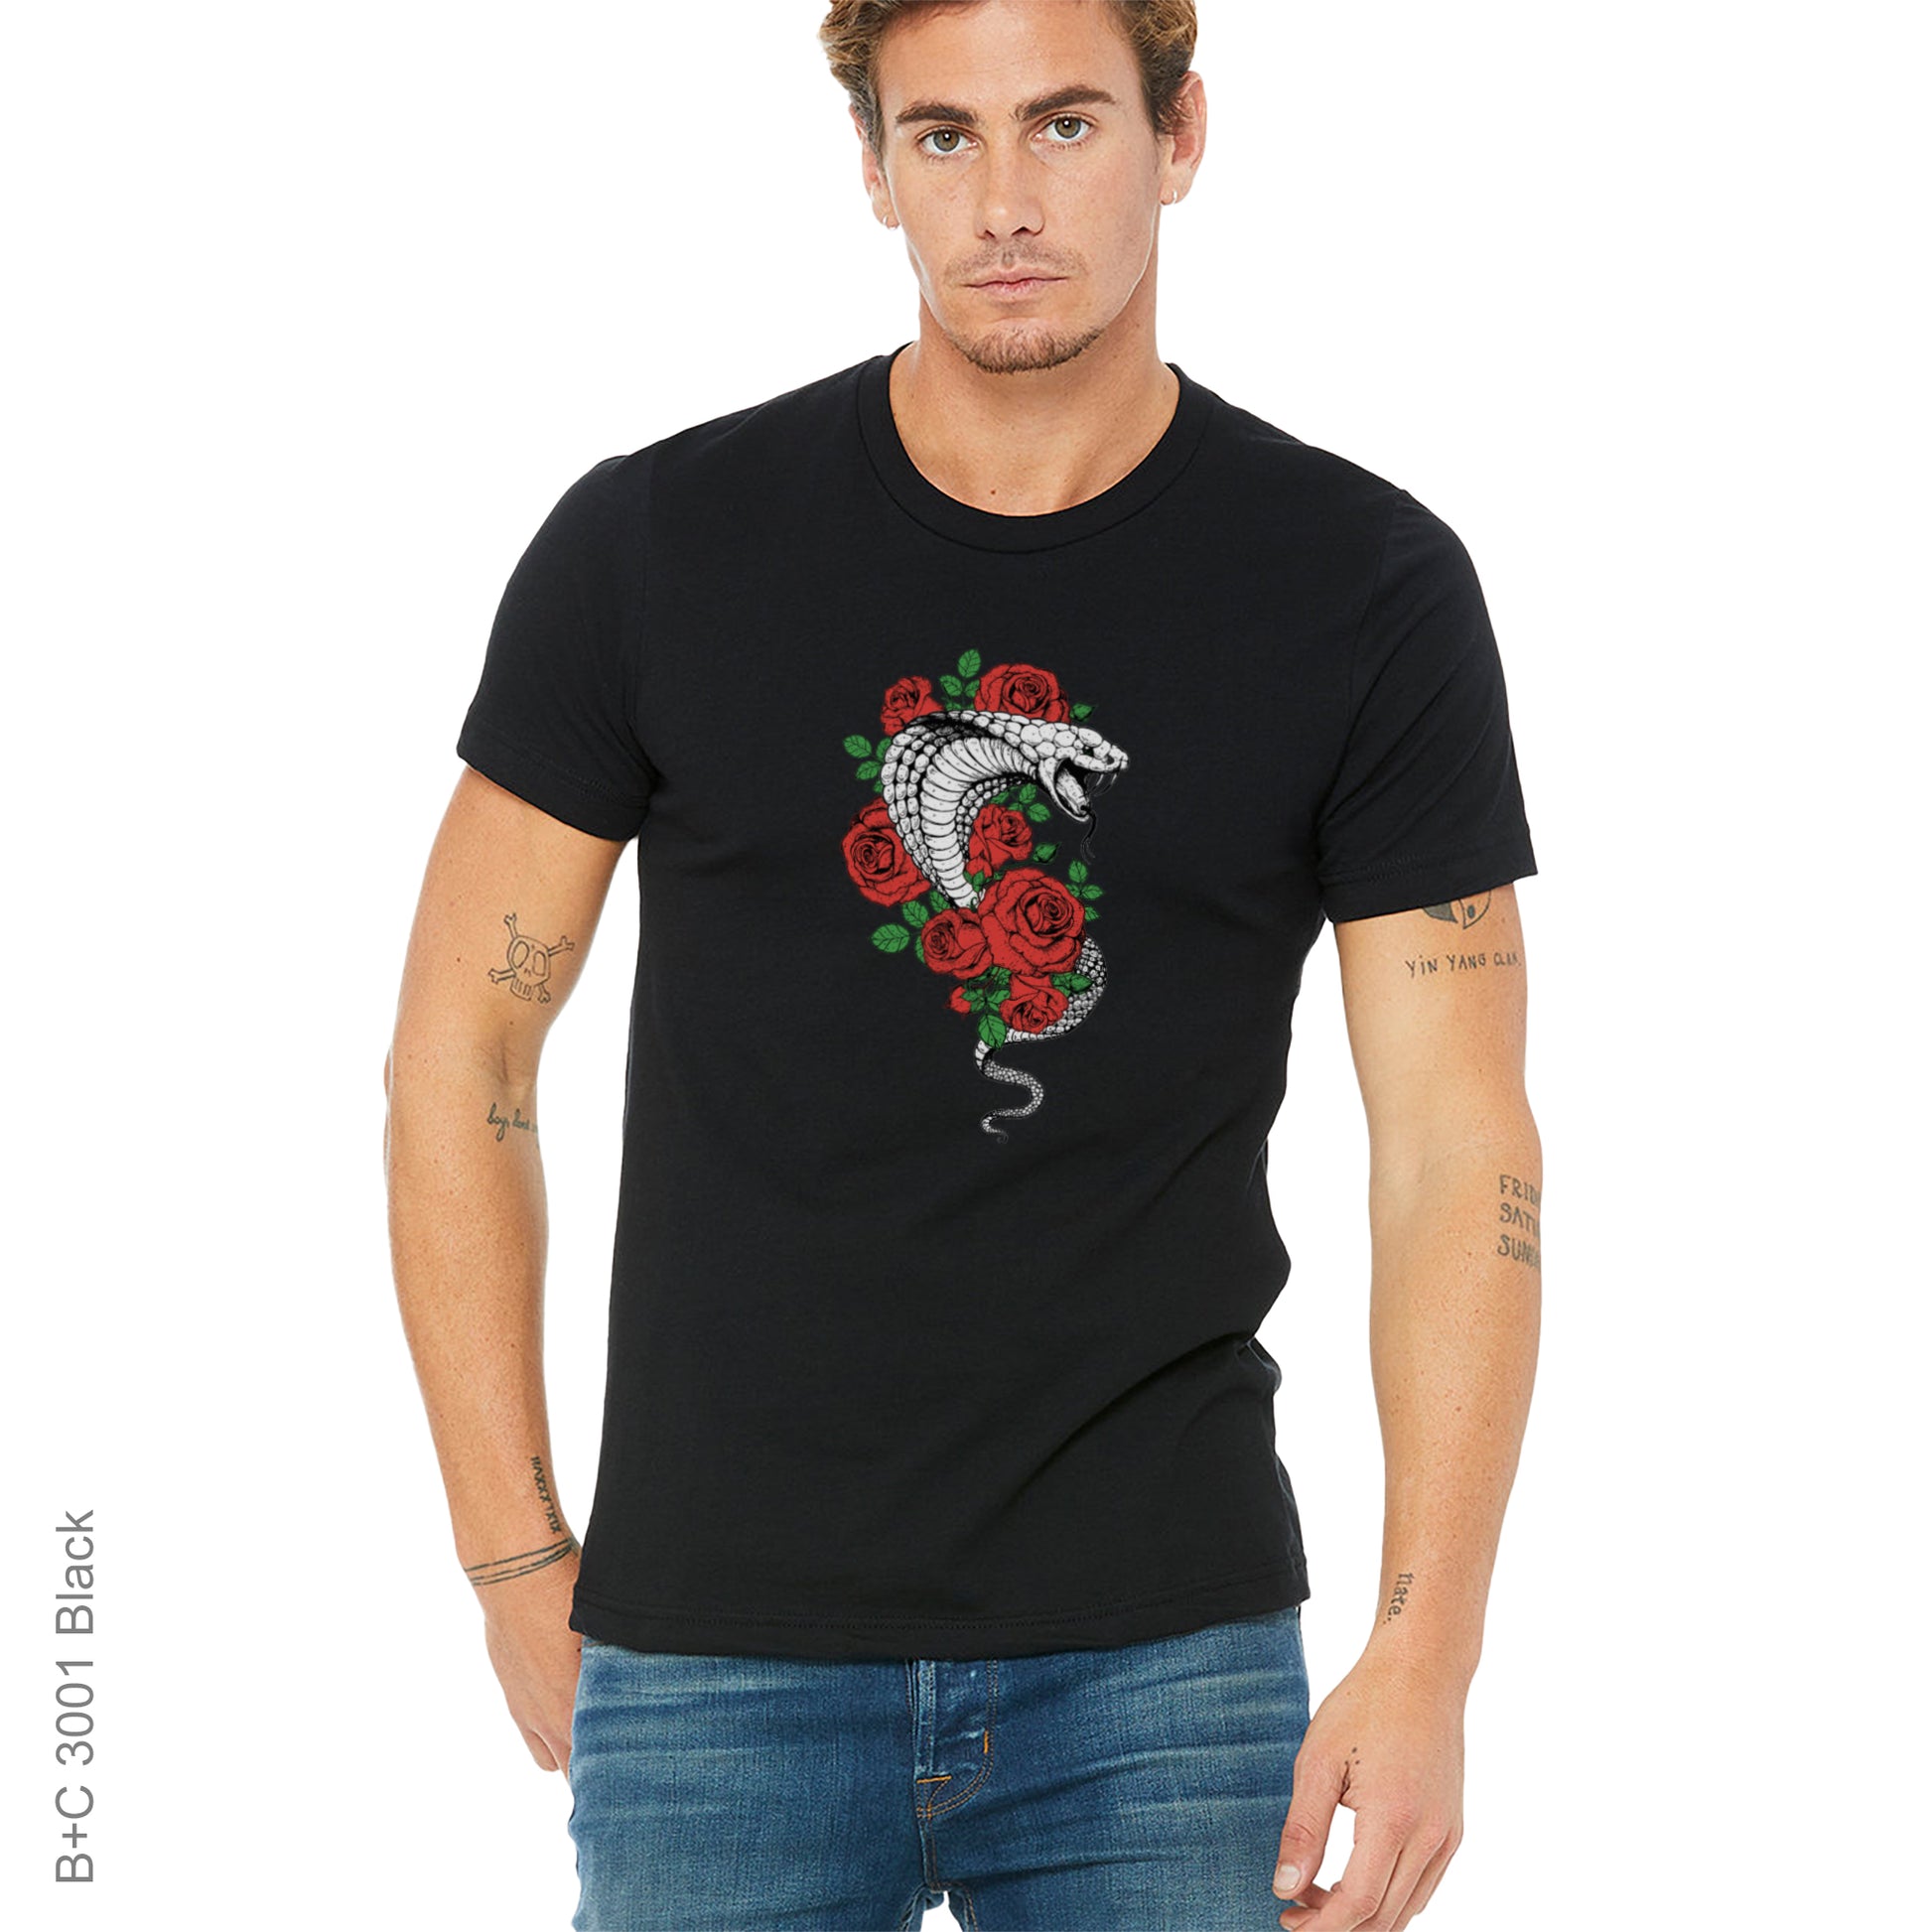 Roses DTF Shirt